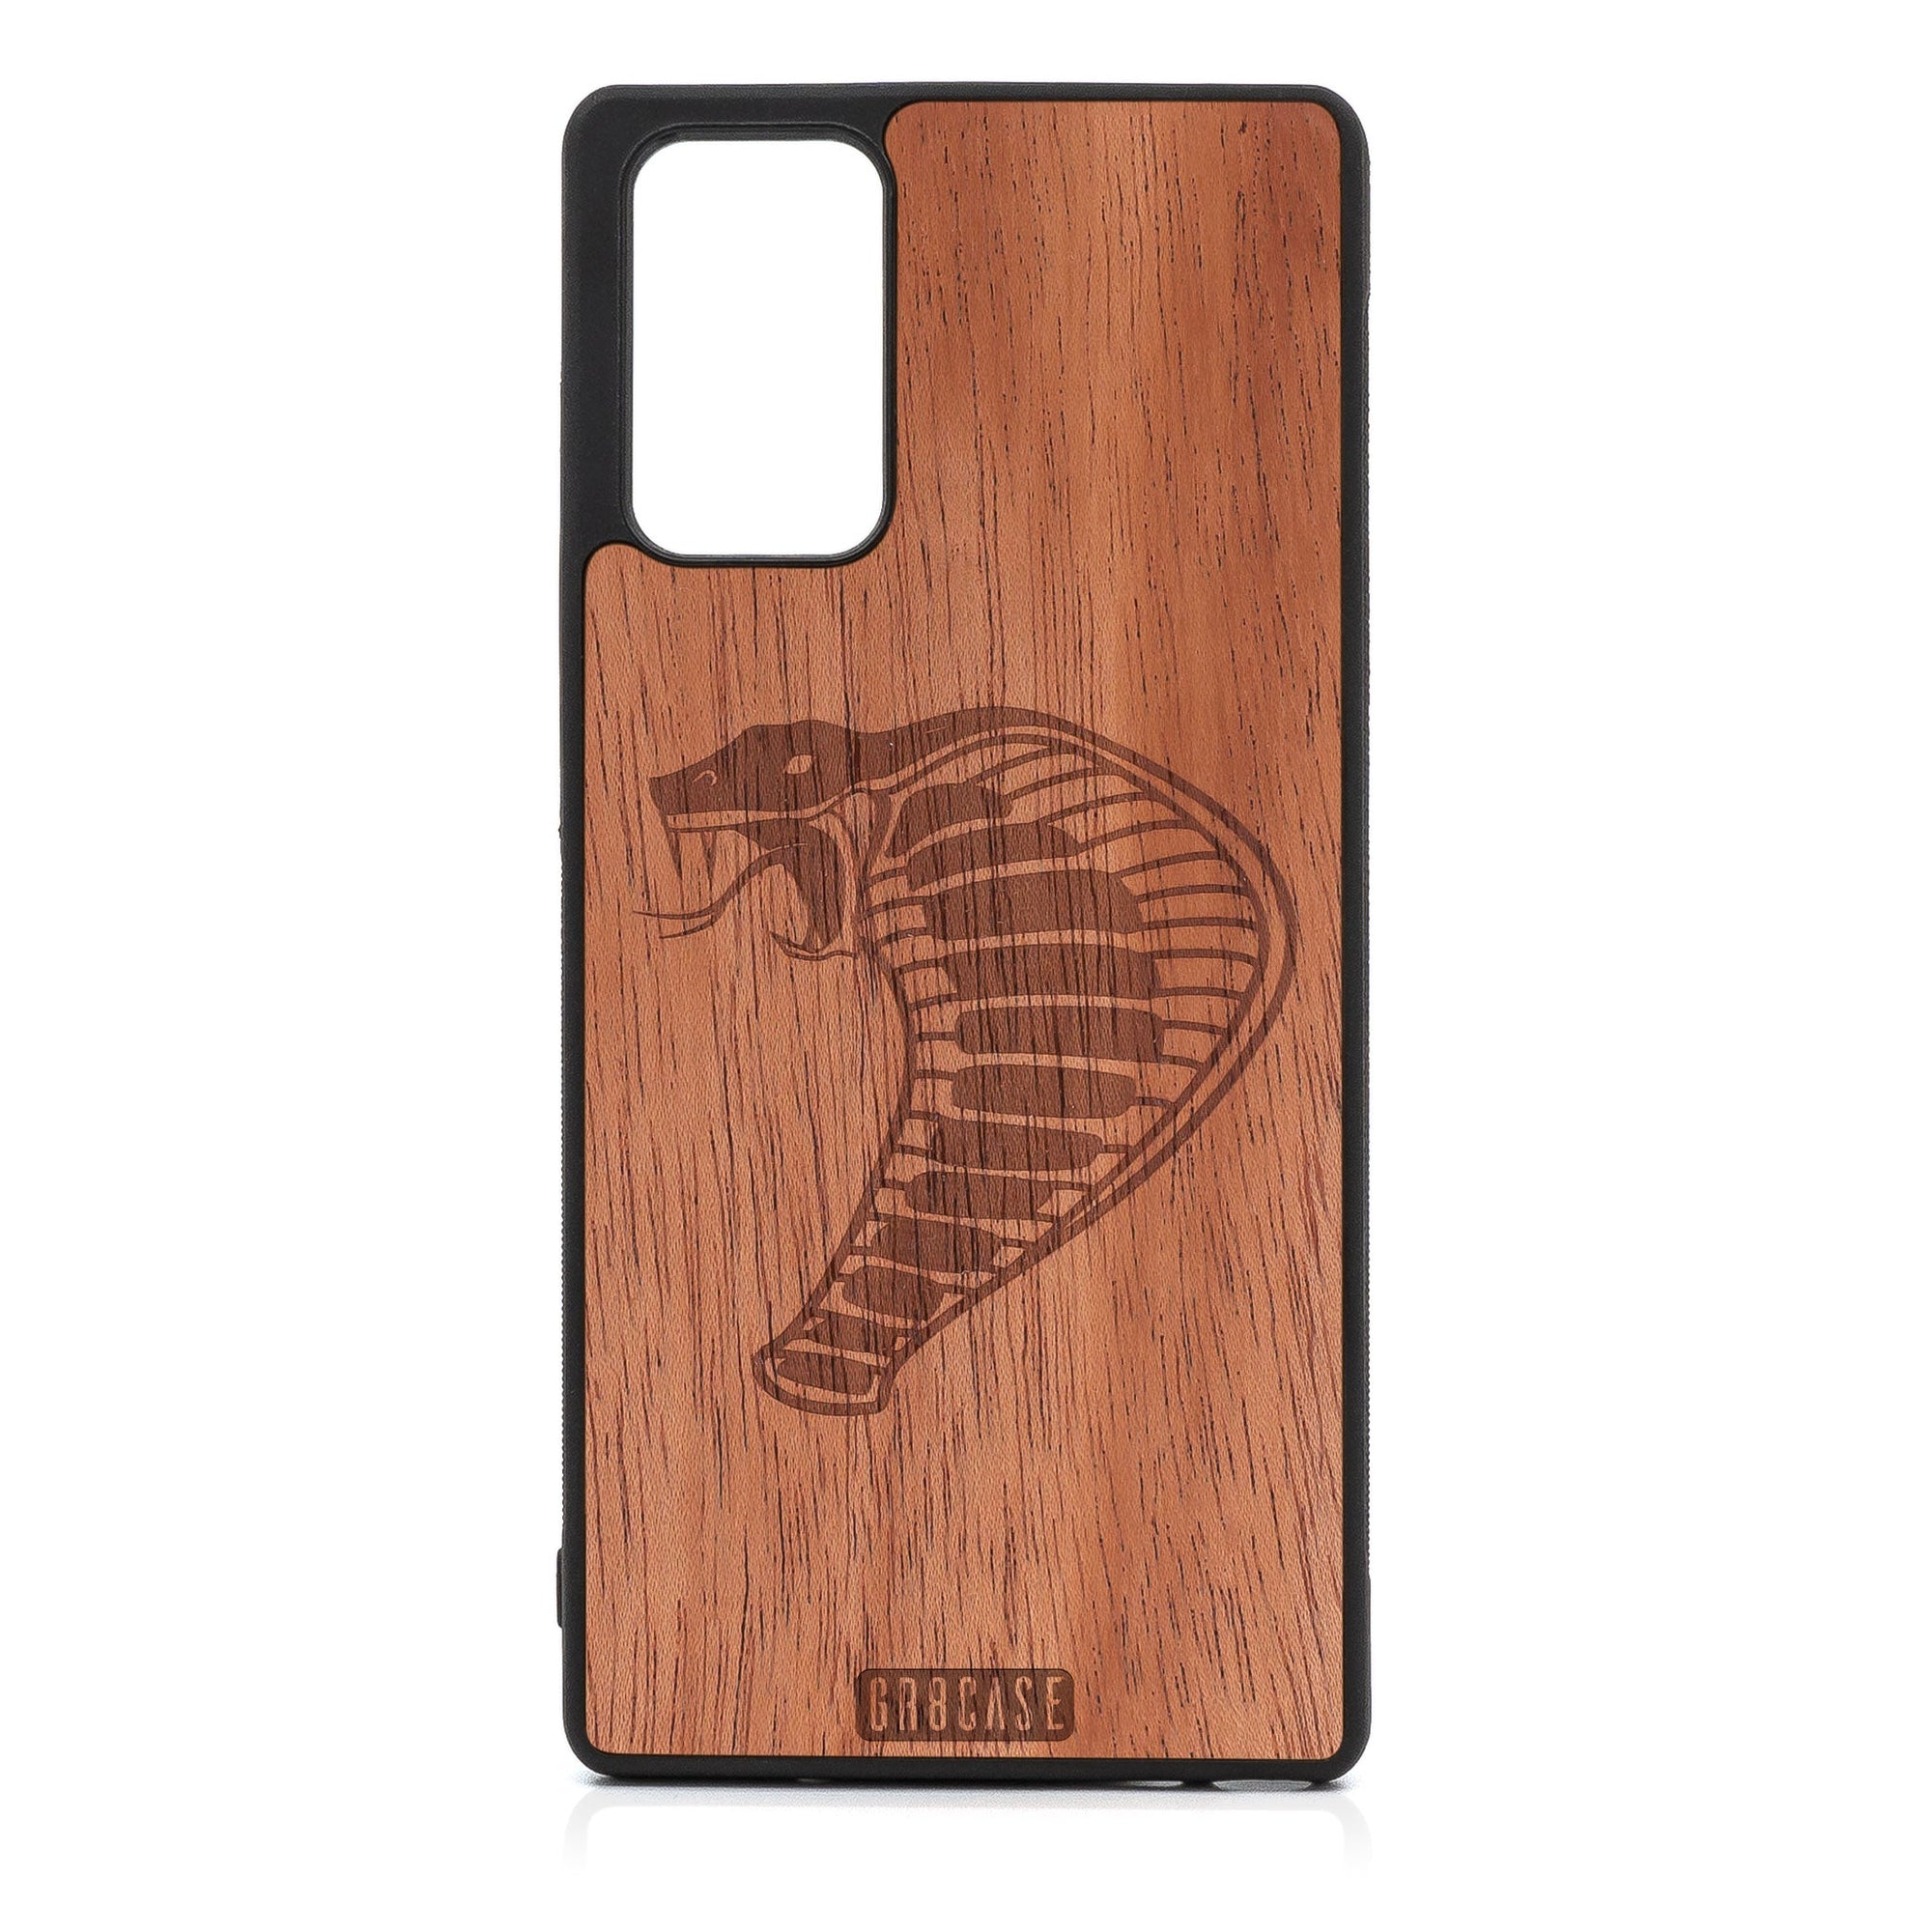 Cobra Design Wood Case For Samsung Galaxy A52 5G